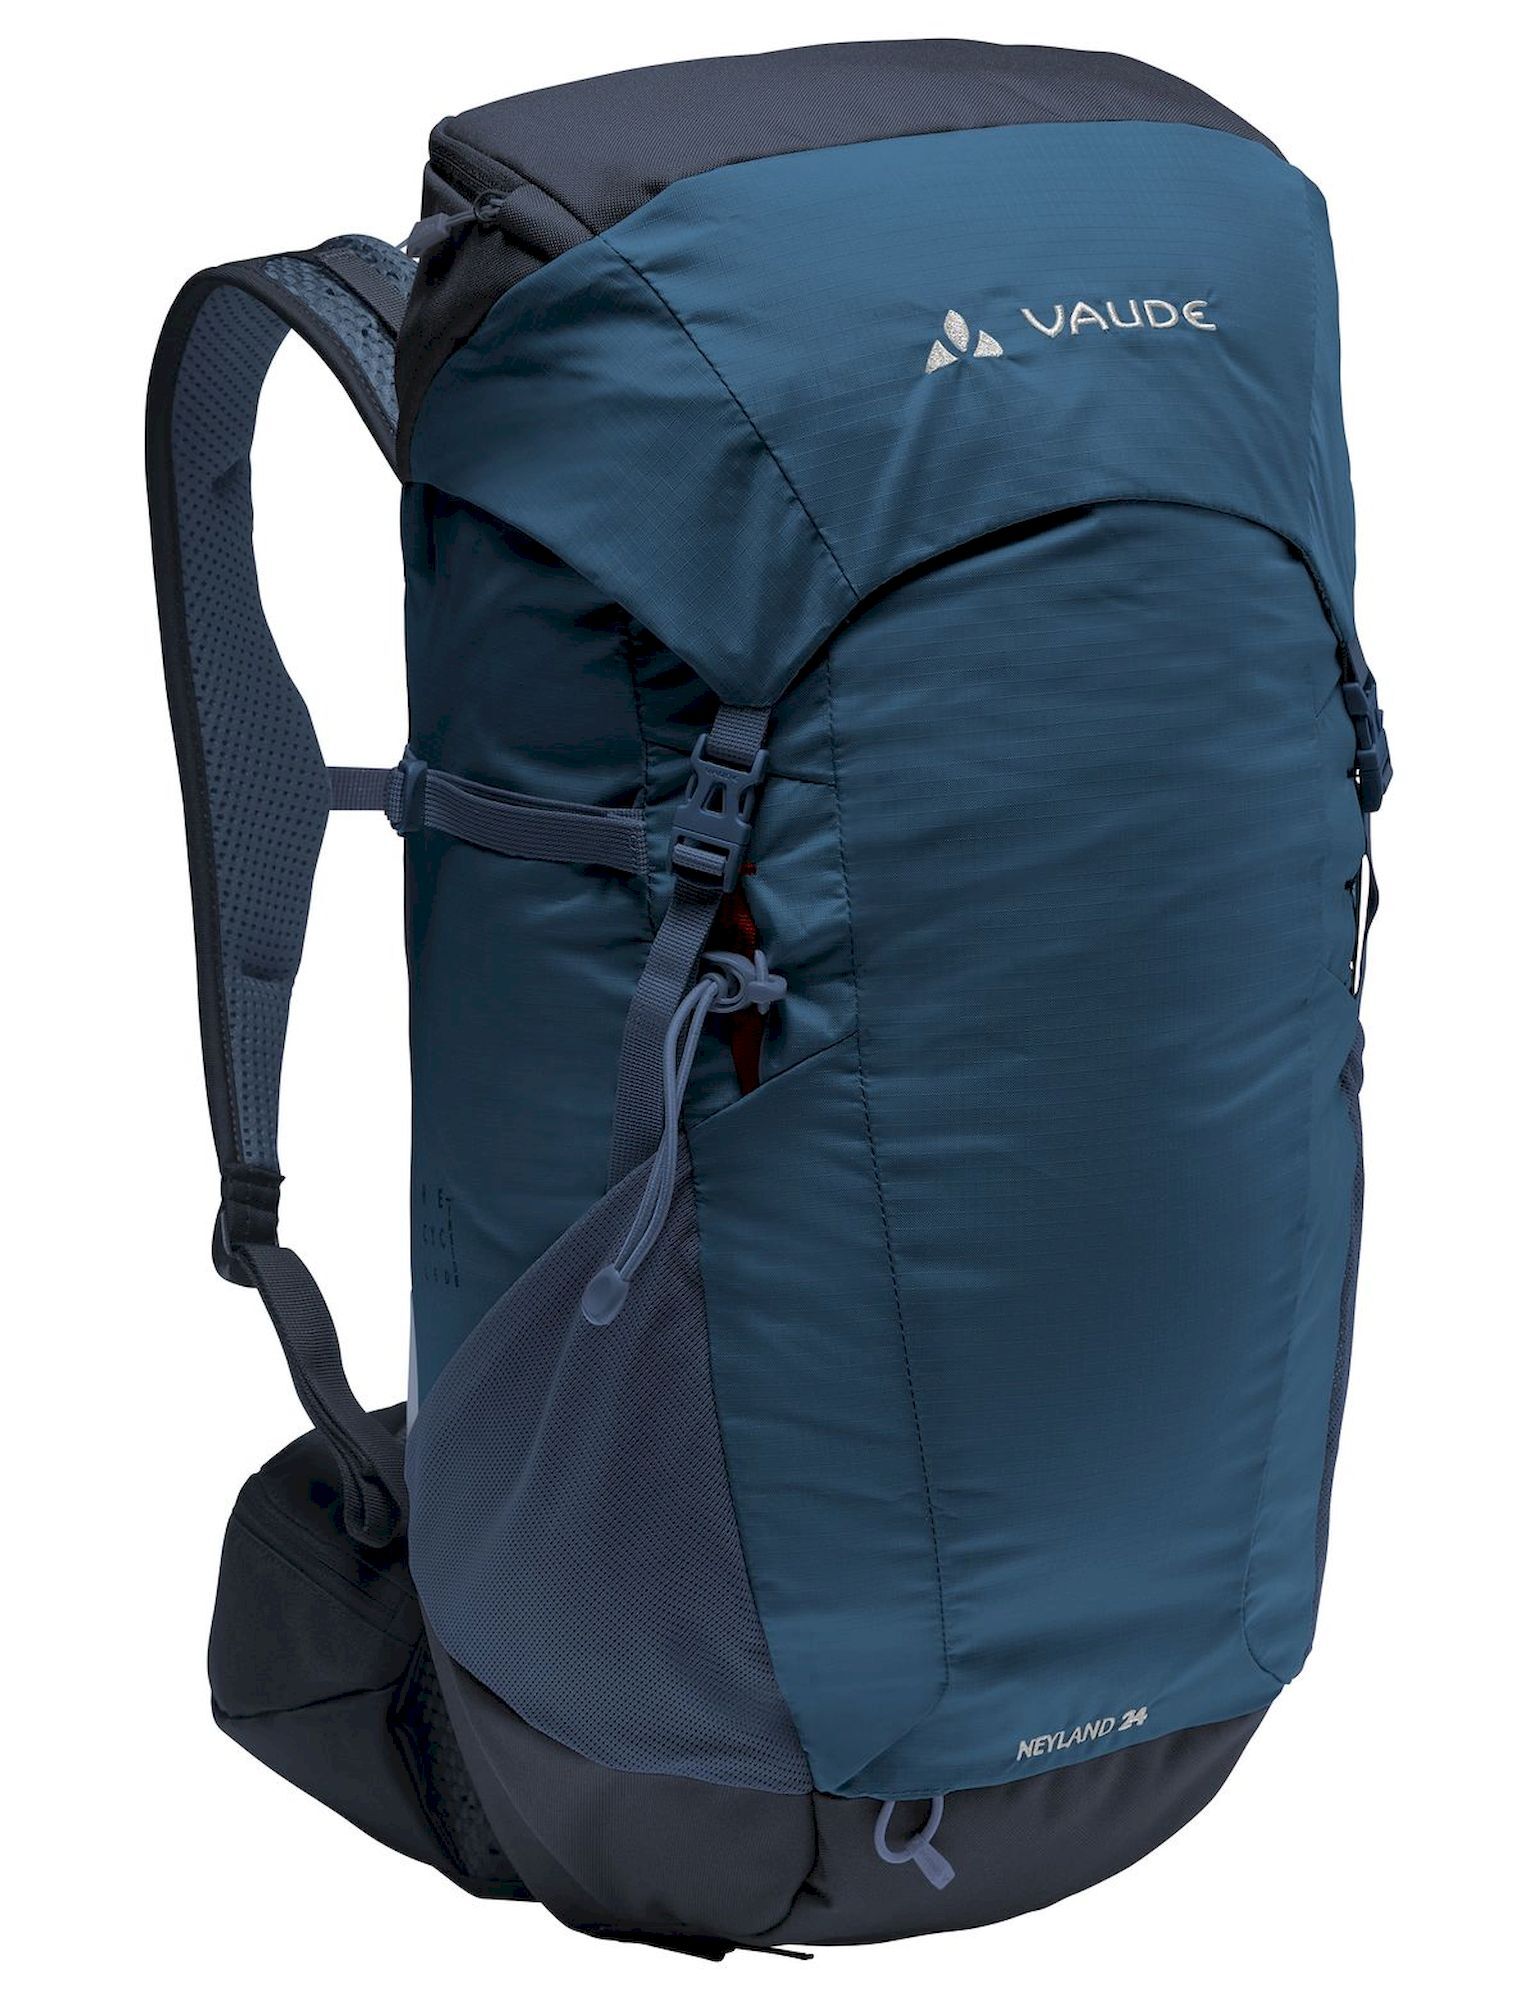 Vaude Neyland 24 - Walking backpack | Hardloop